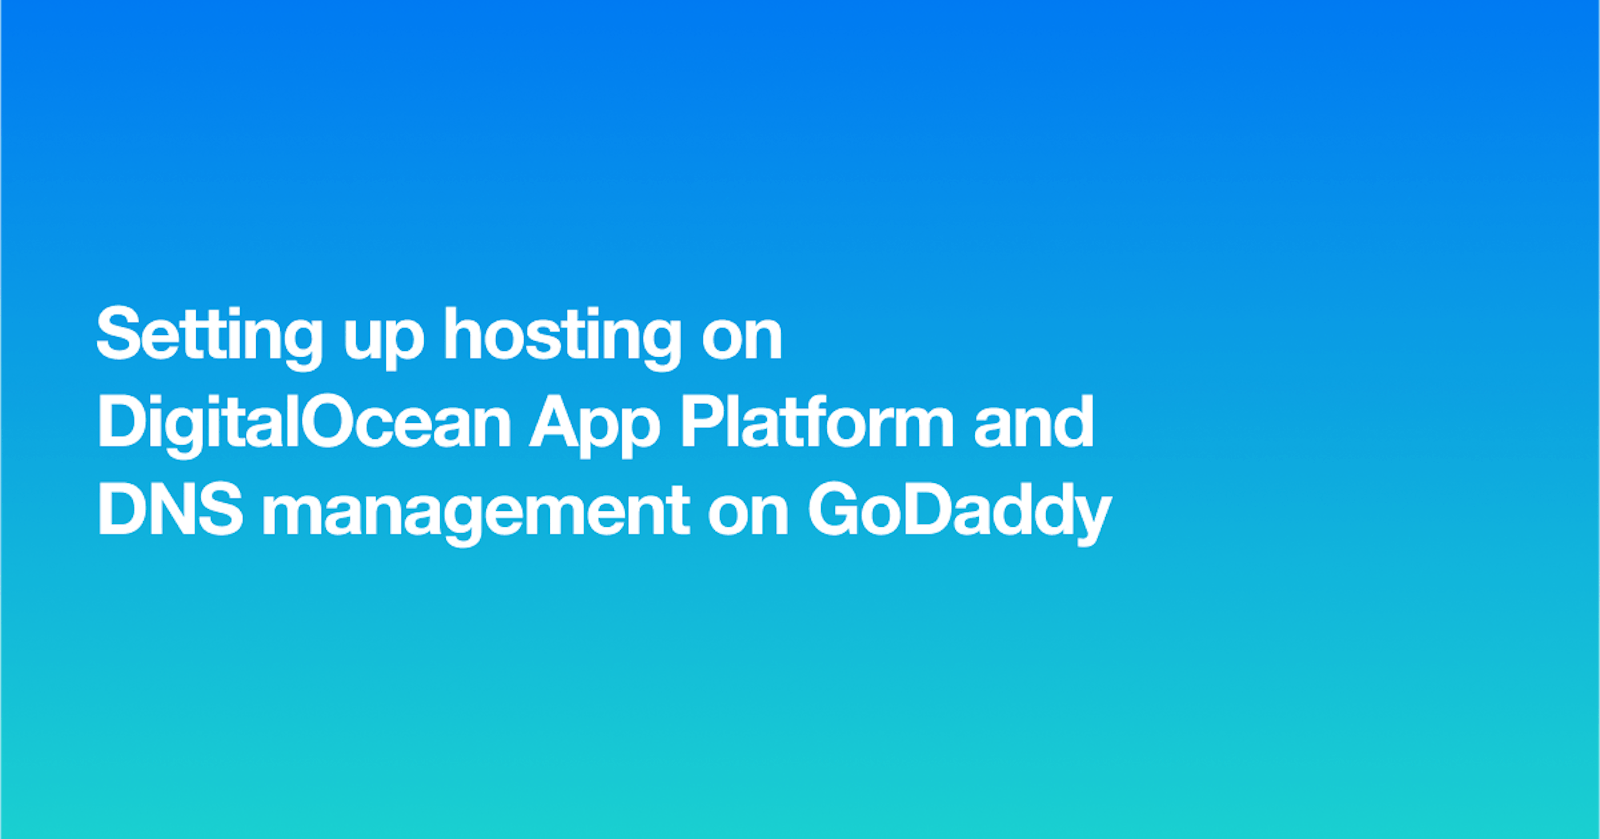 Setting up hosting on DigitalOcean App Platform and DNS management on GoDaddy